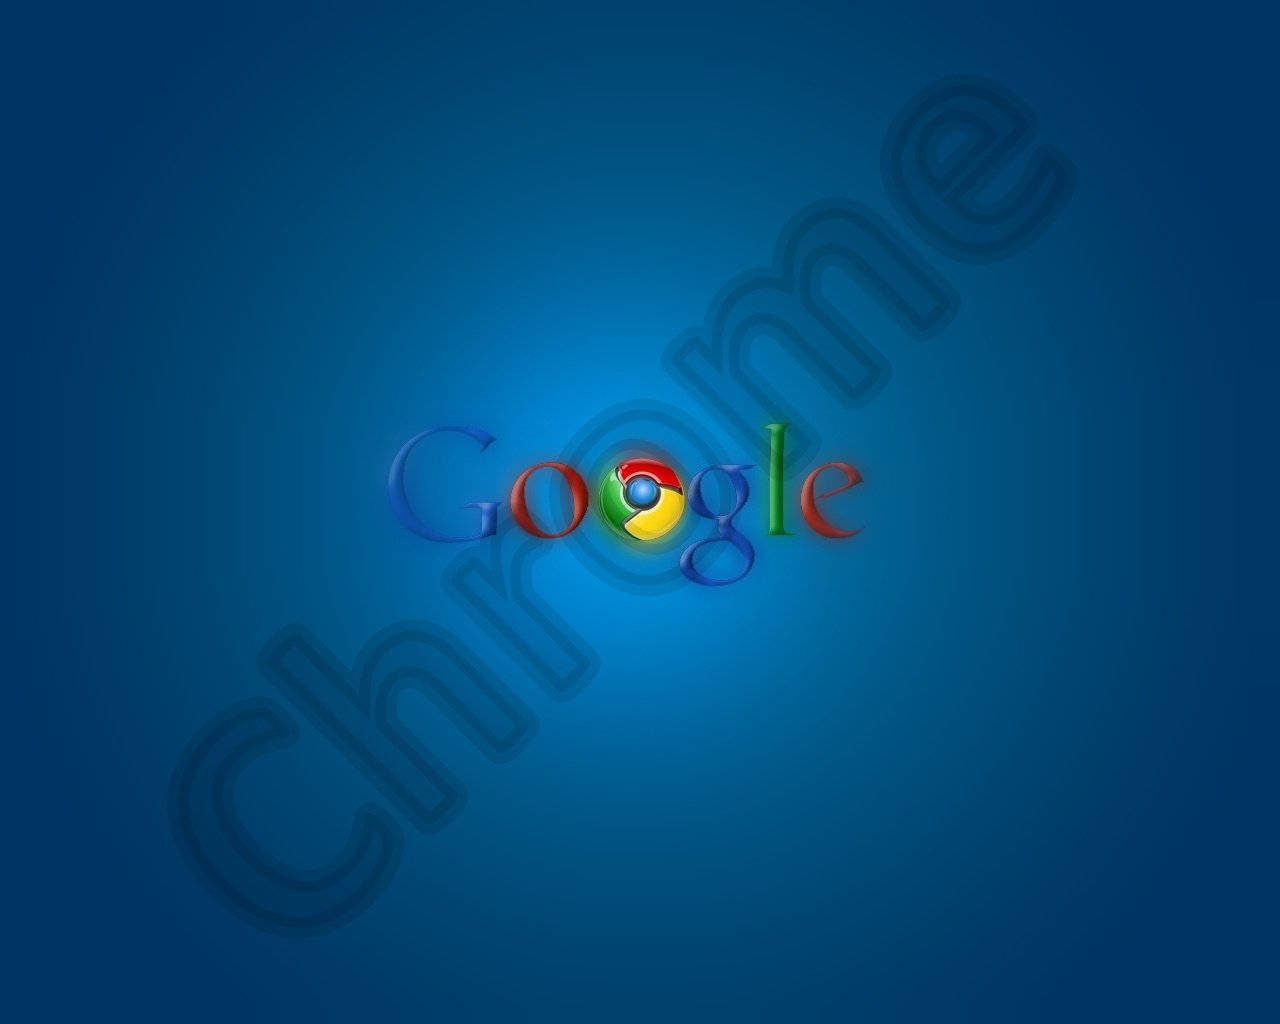 Google Chrome In Blue Shade Wallpaper